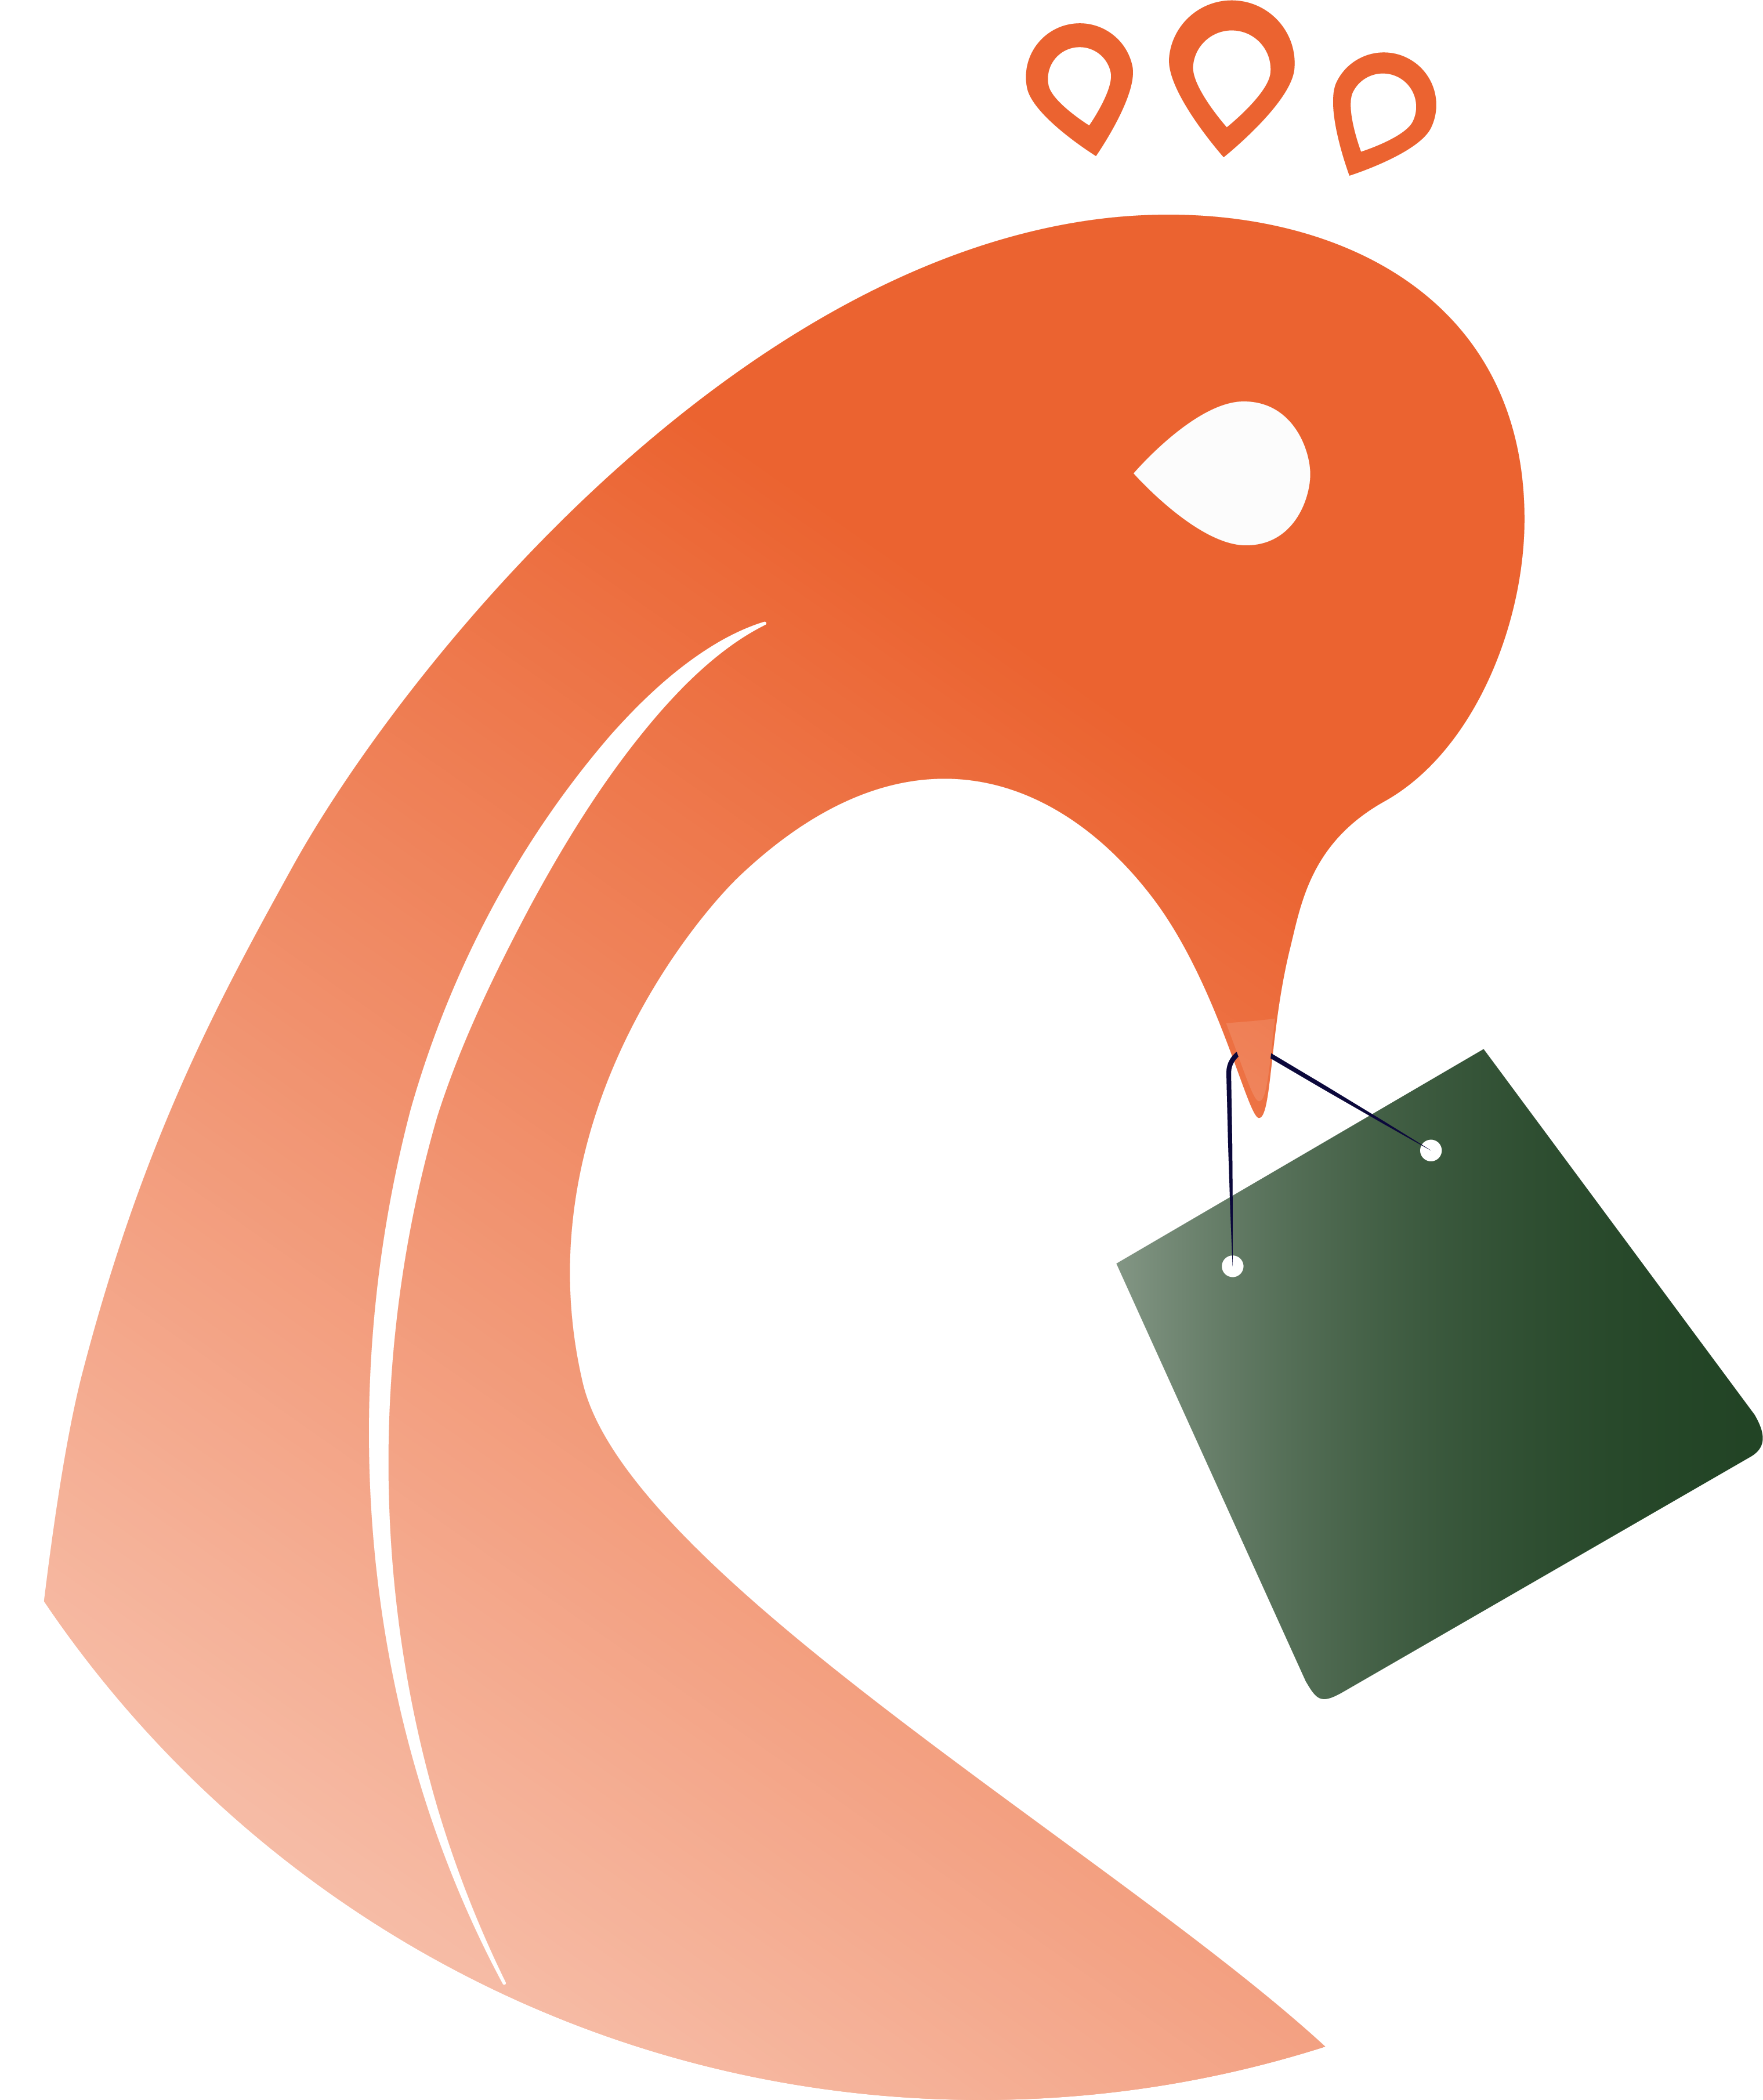 Zaars logo